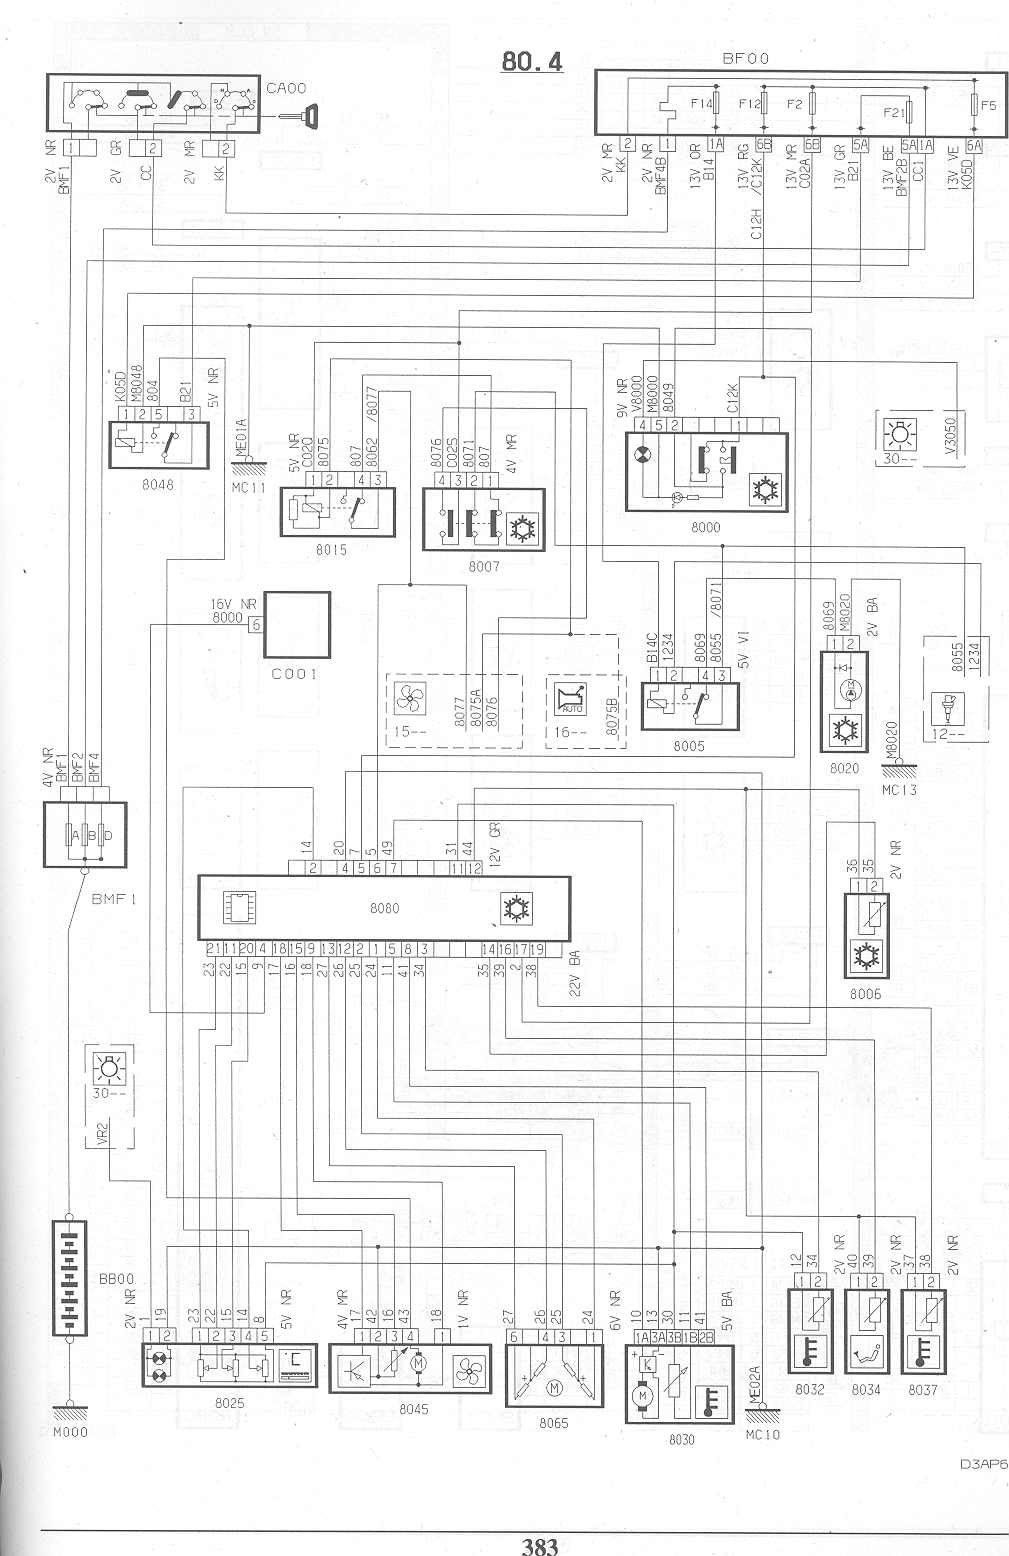 Citroen Berlingo 1 6 Hdi Wiring Diagram - Wiring Diagram